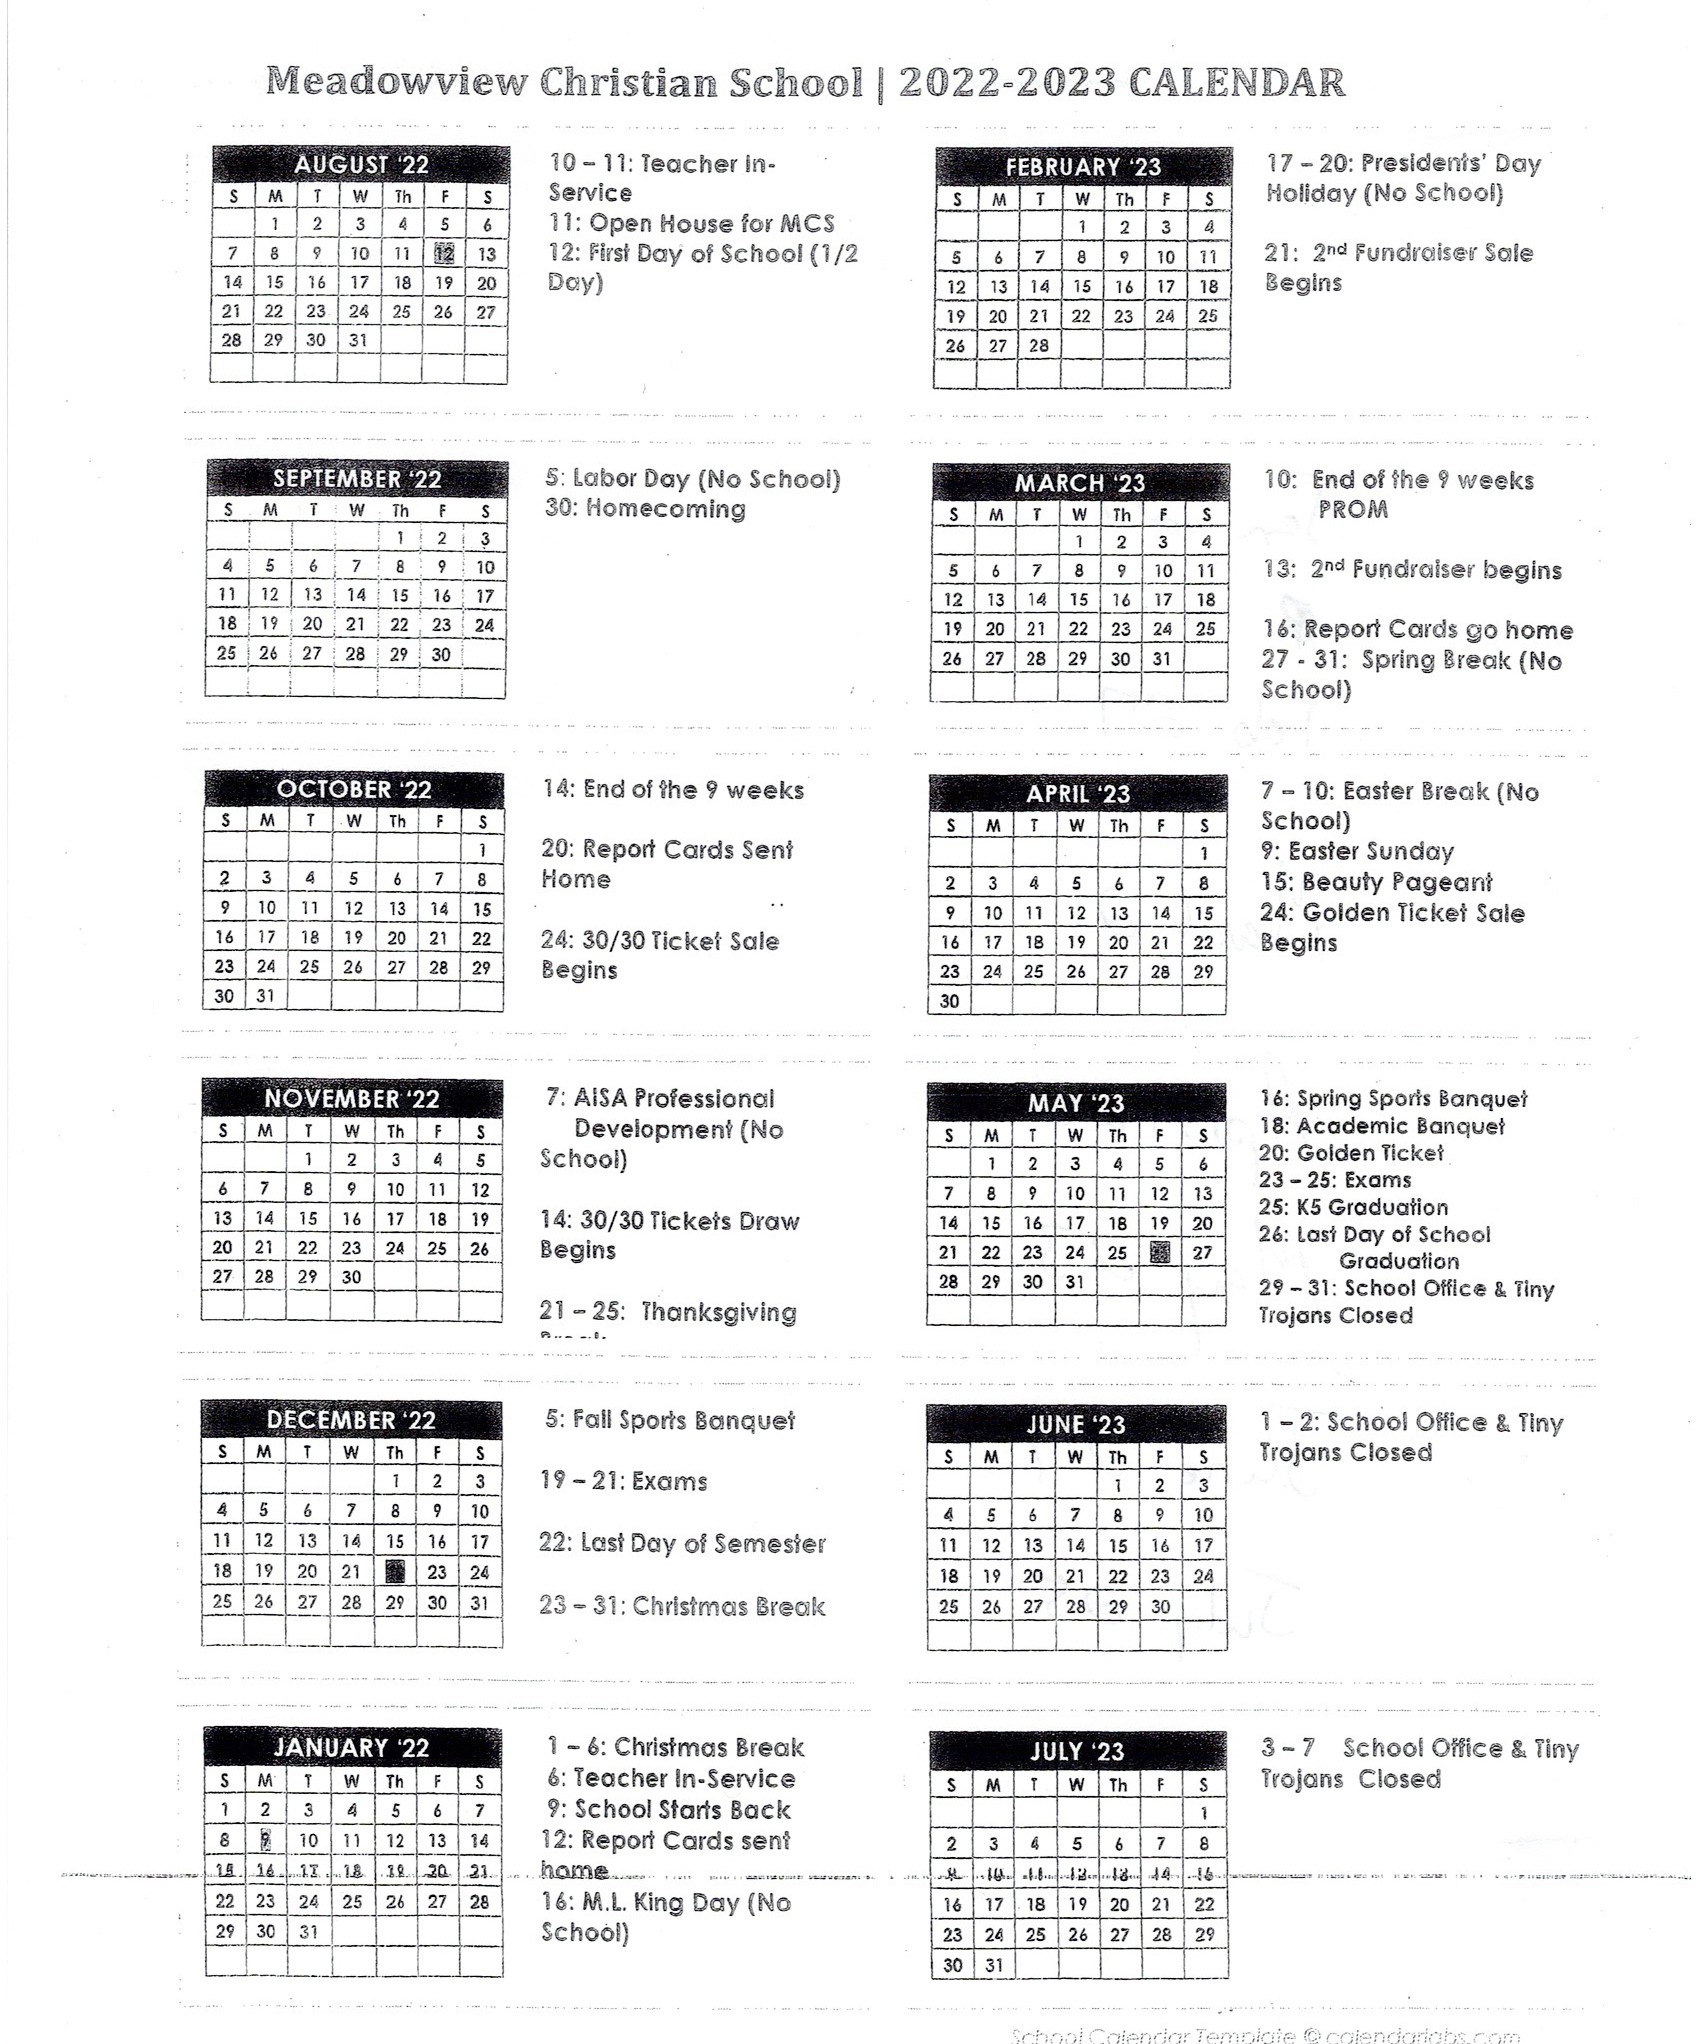 15-month-school-year-calendar-2025-2026